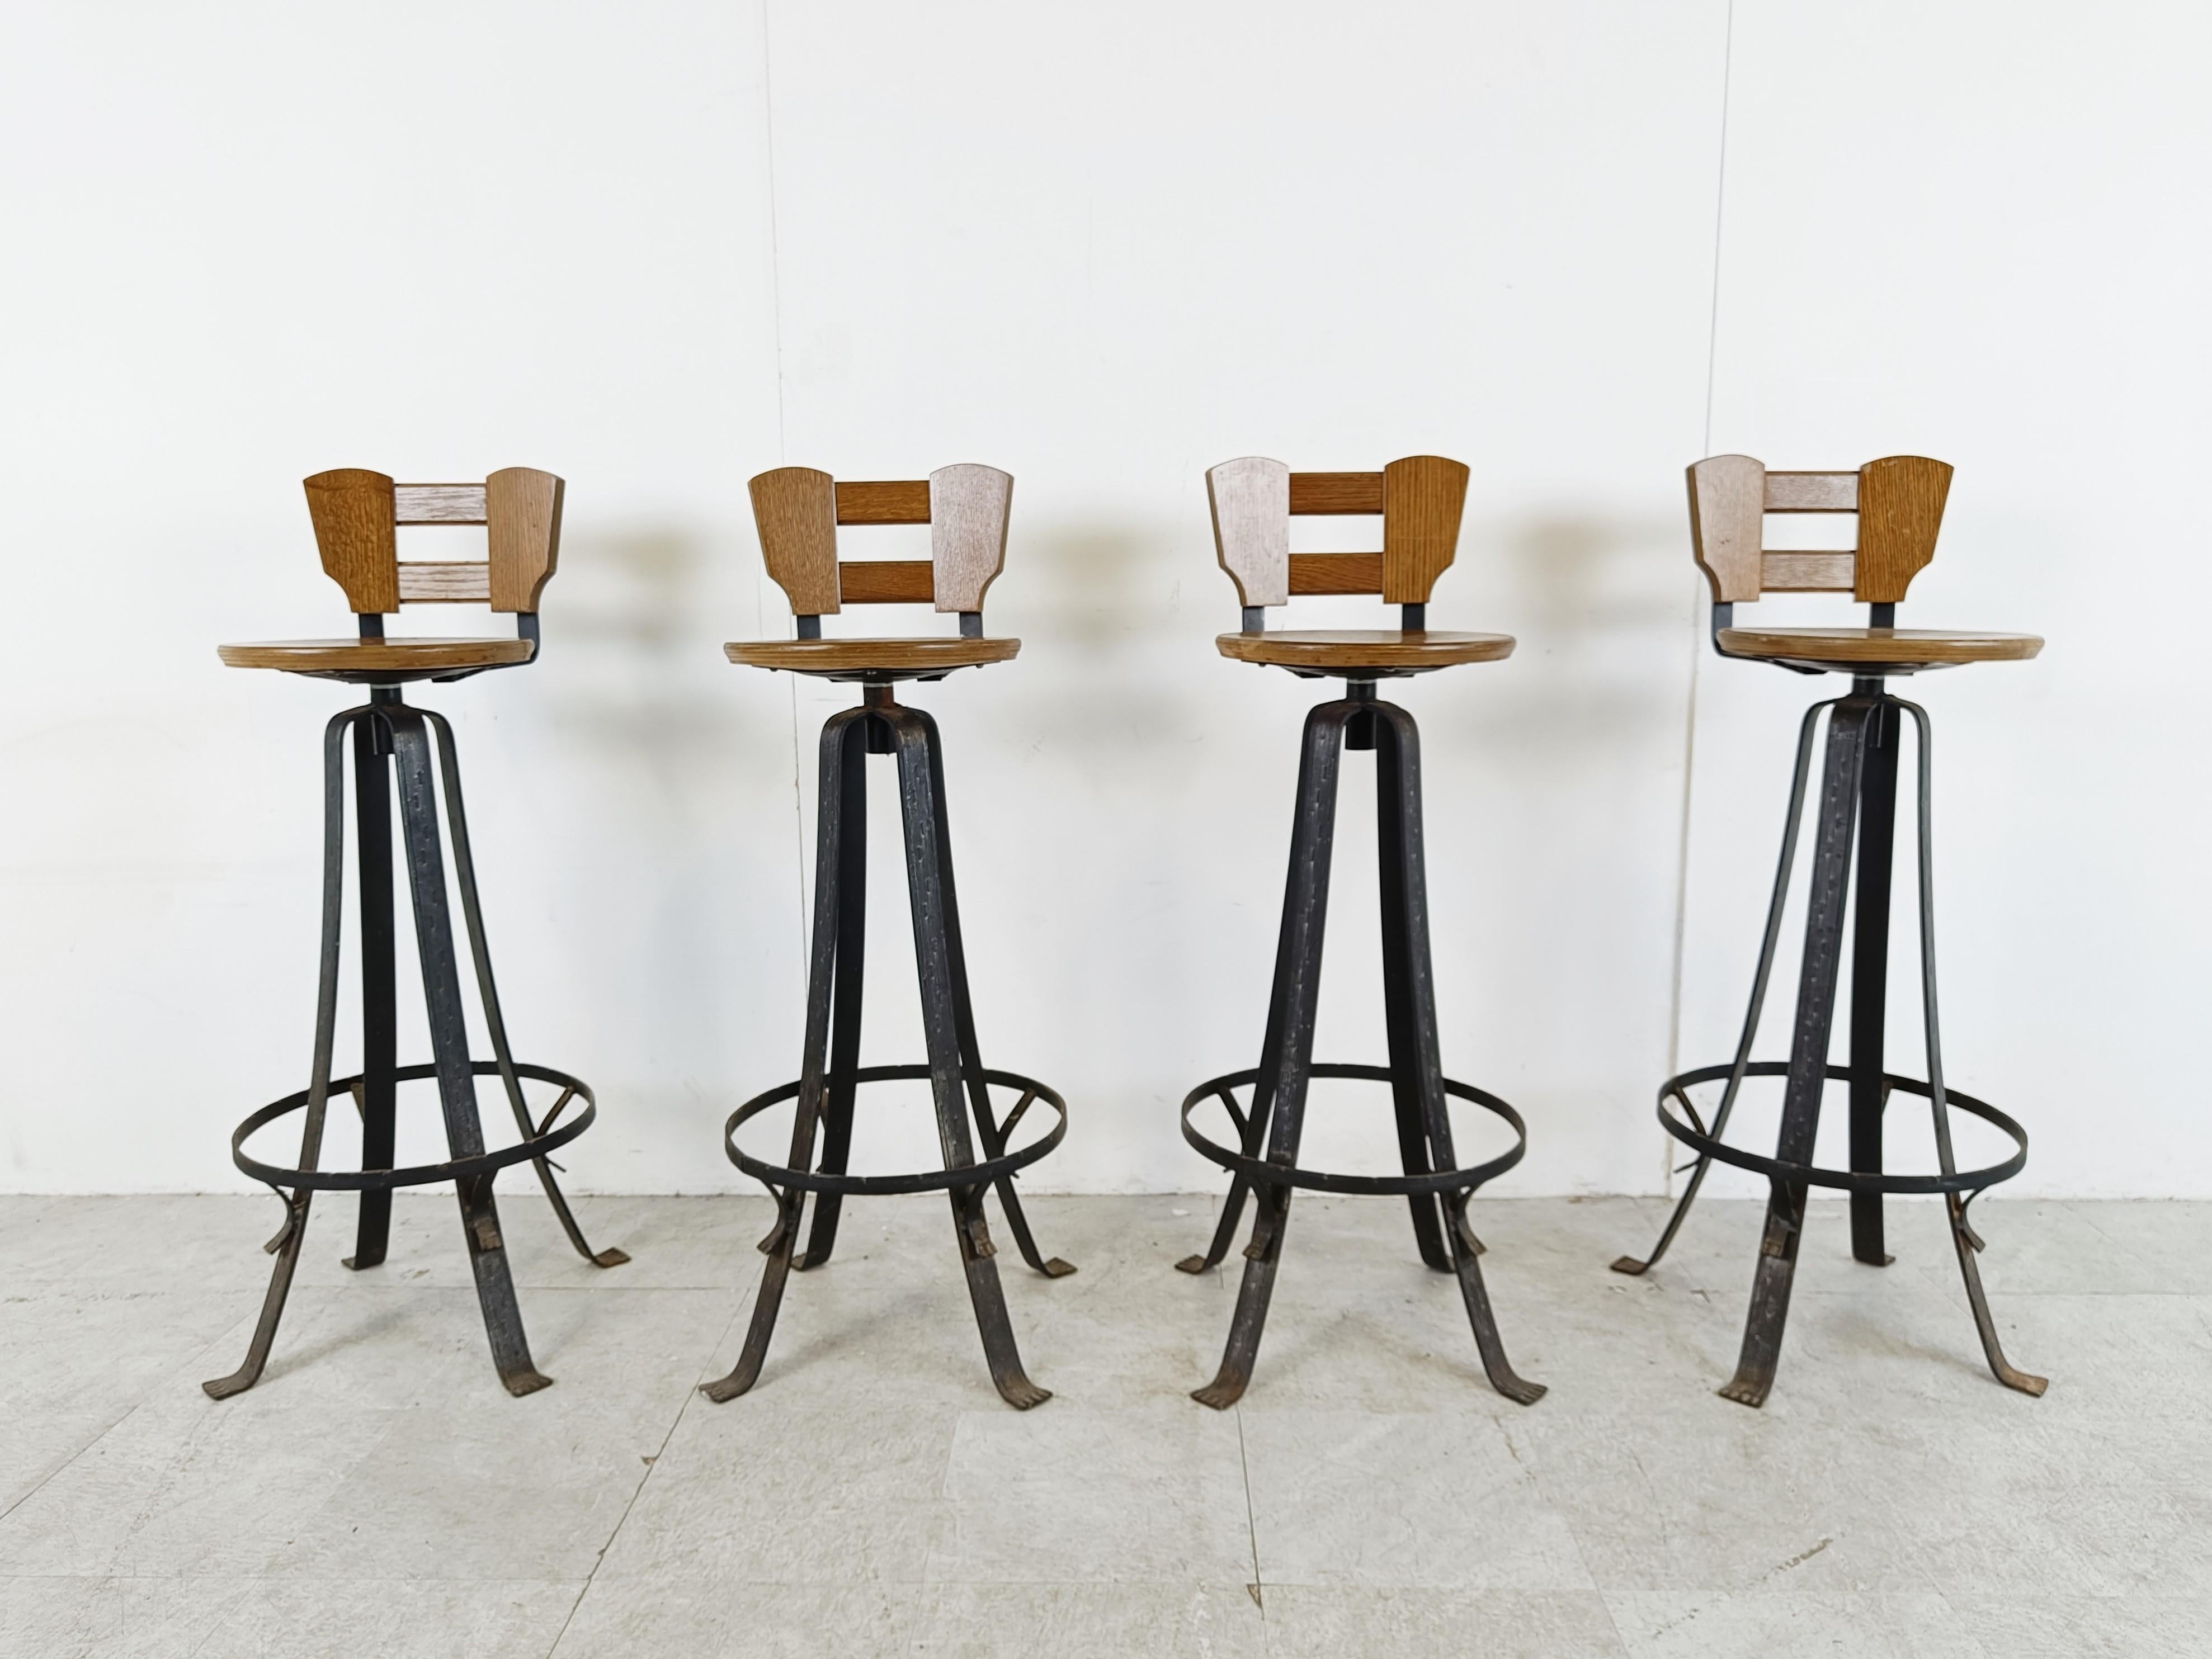 German Vintage brutalist bar stools, 1970s